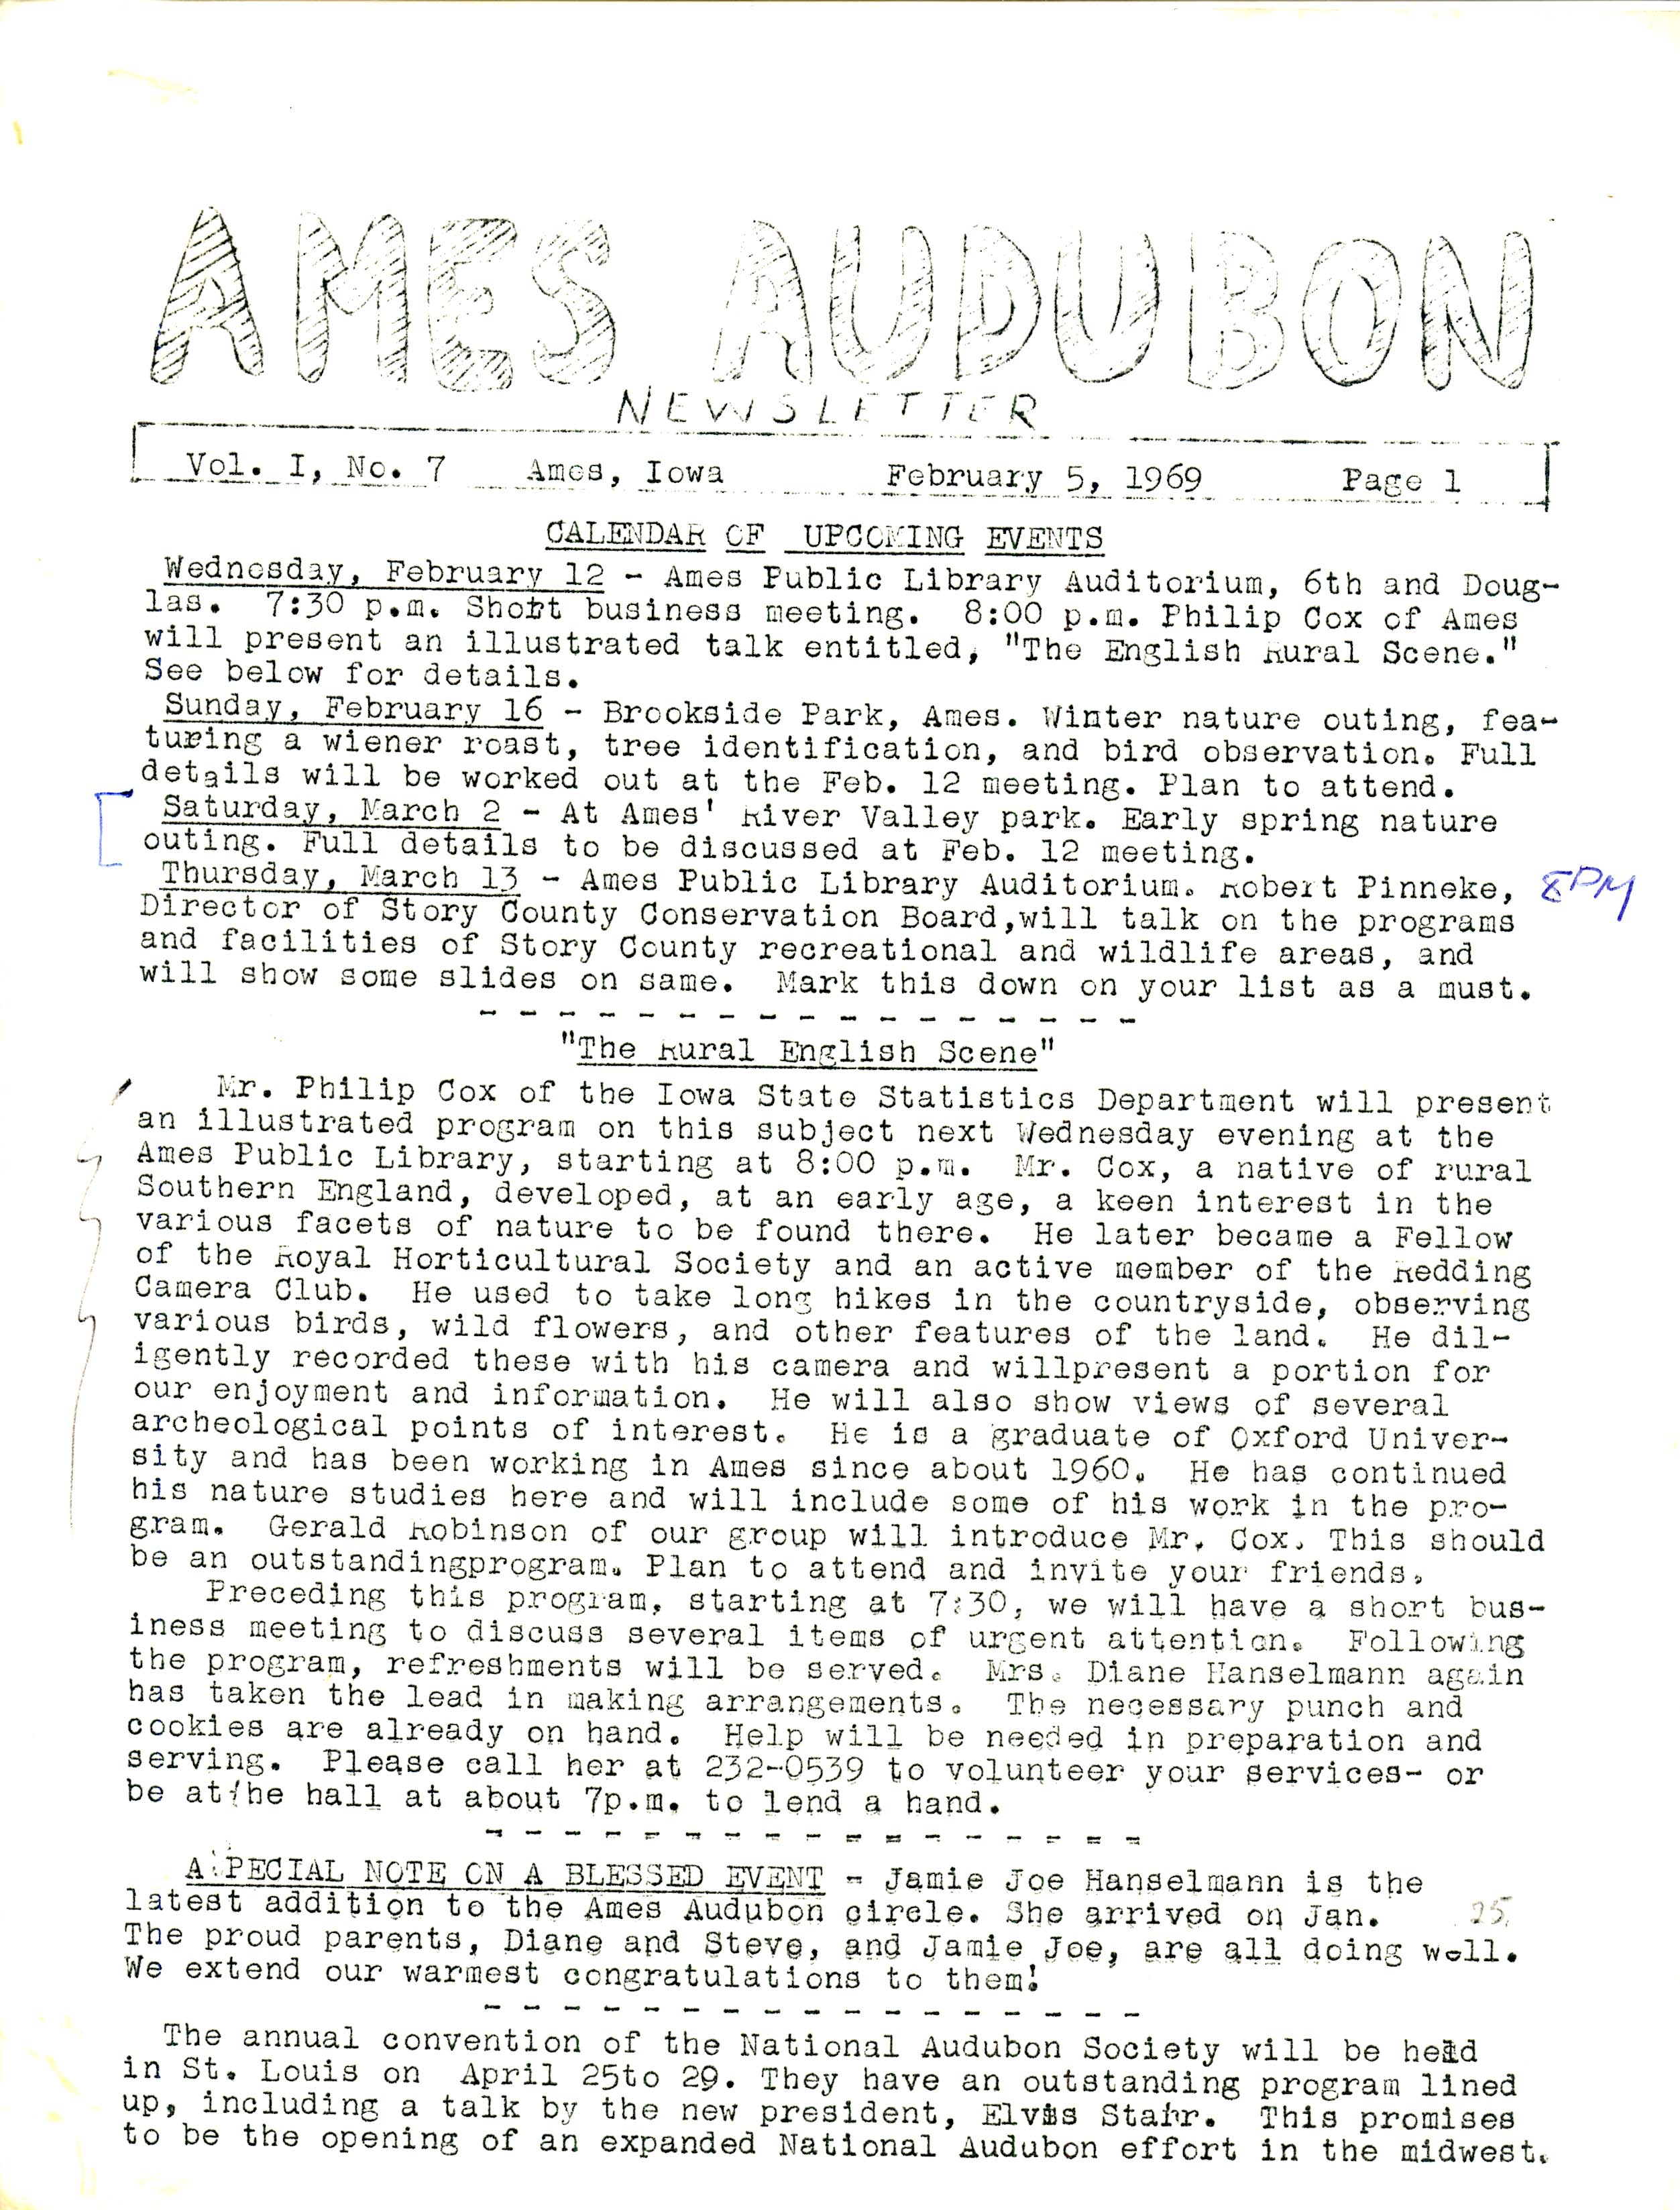 Ames Audubon Newsletter, Volume 1, Number 7, February 5, 1969